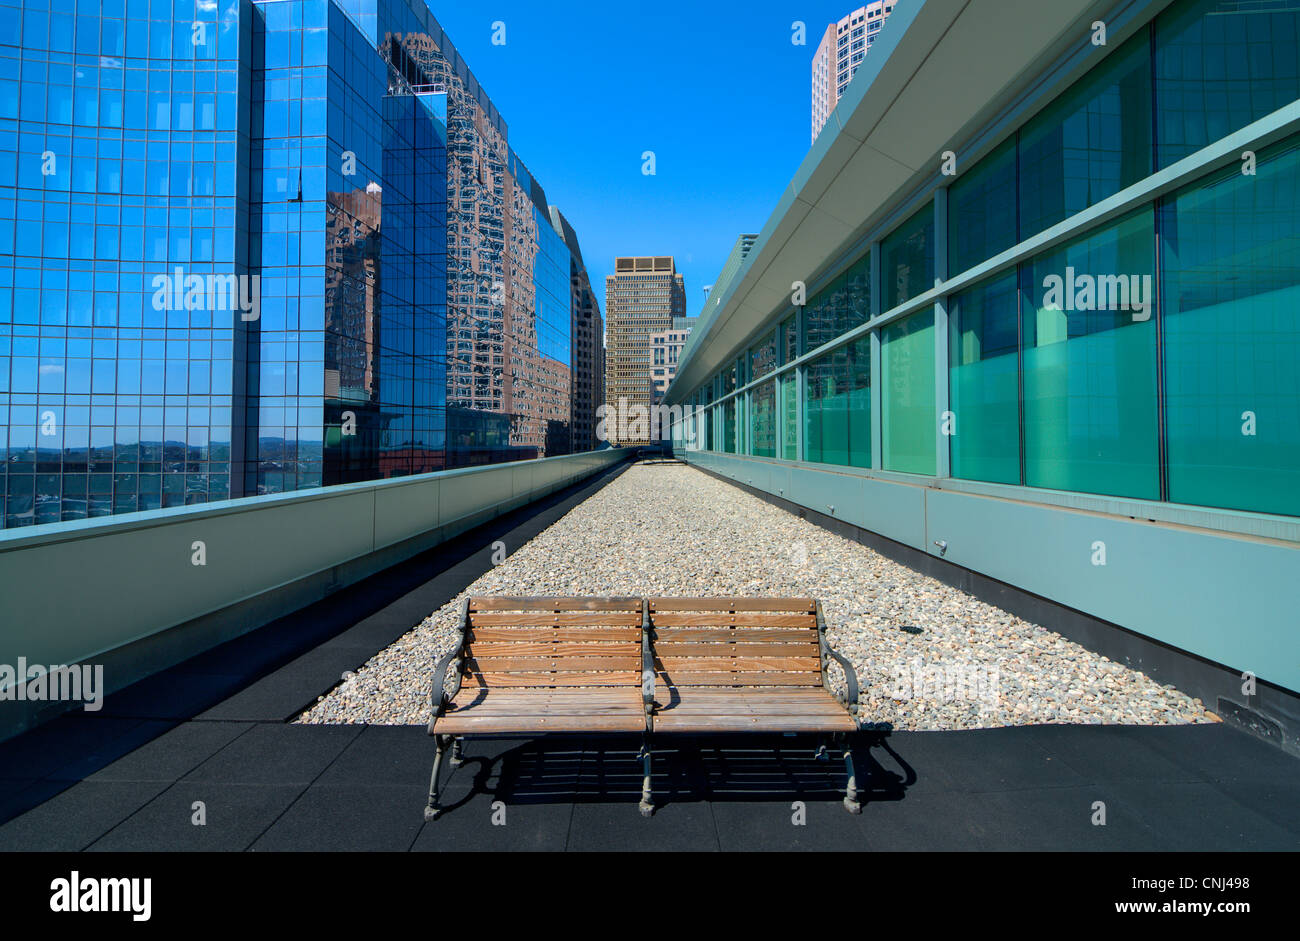 bench among buildings in Boston, Massachusetts. Stock Photo